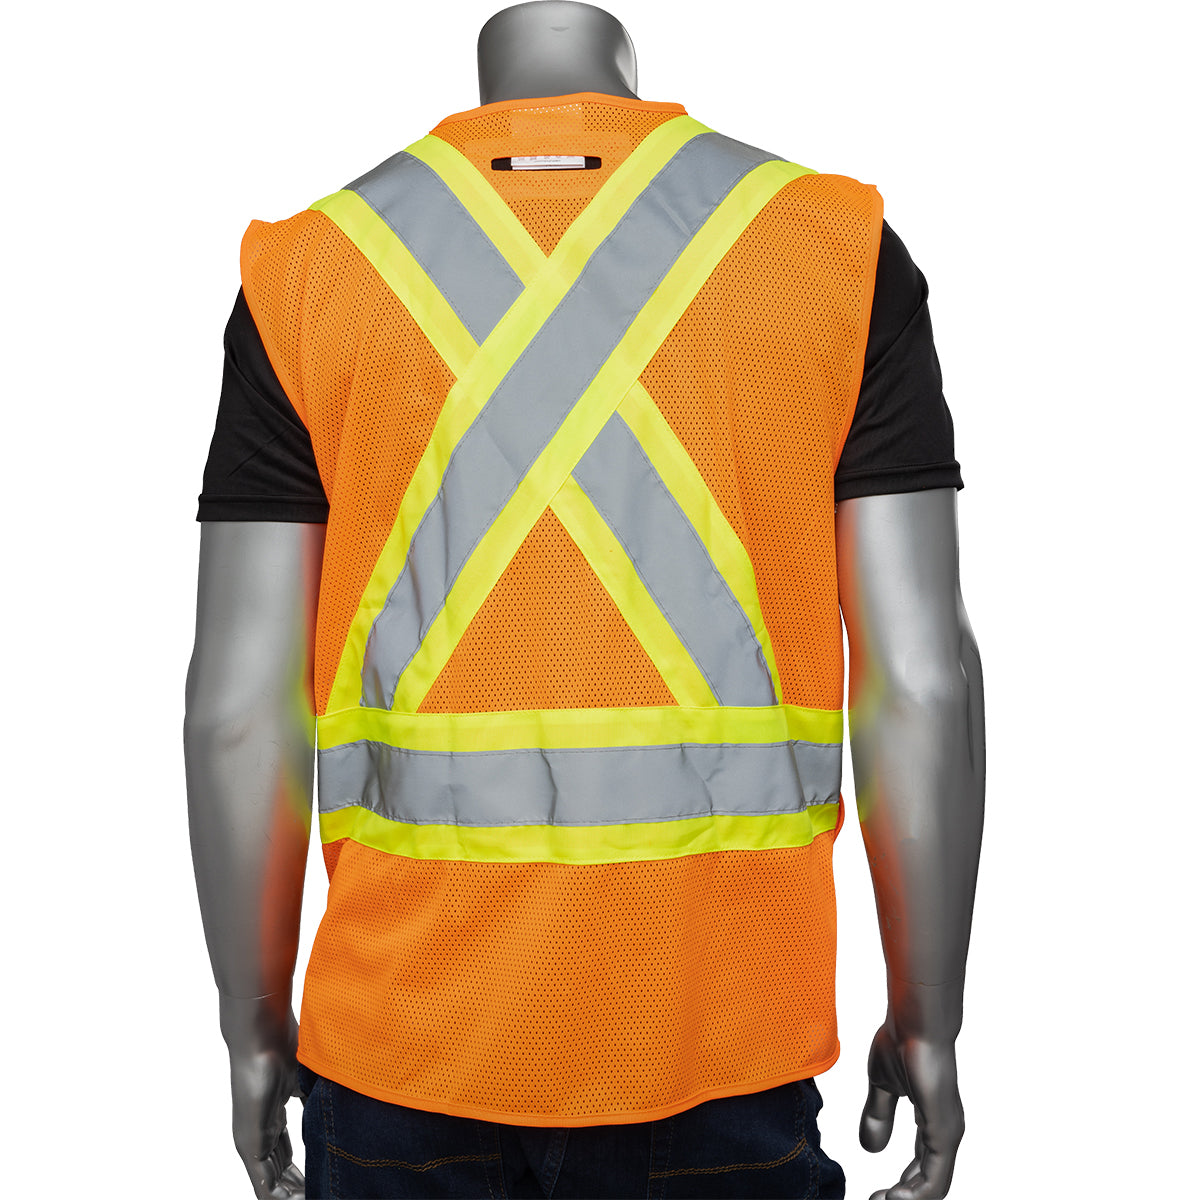 Tear Away Surveyor Style Vest with Mesh Back, CSA Z96 Class 2